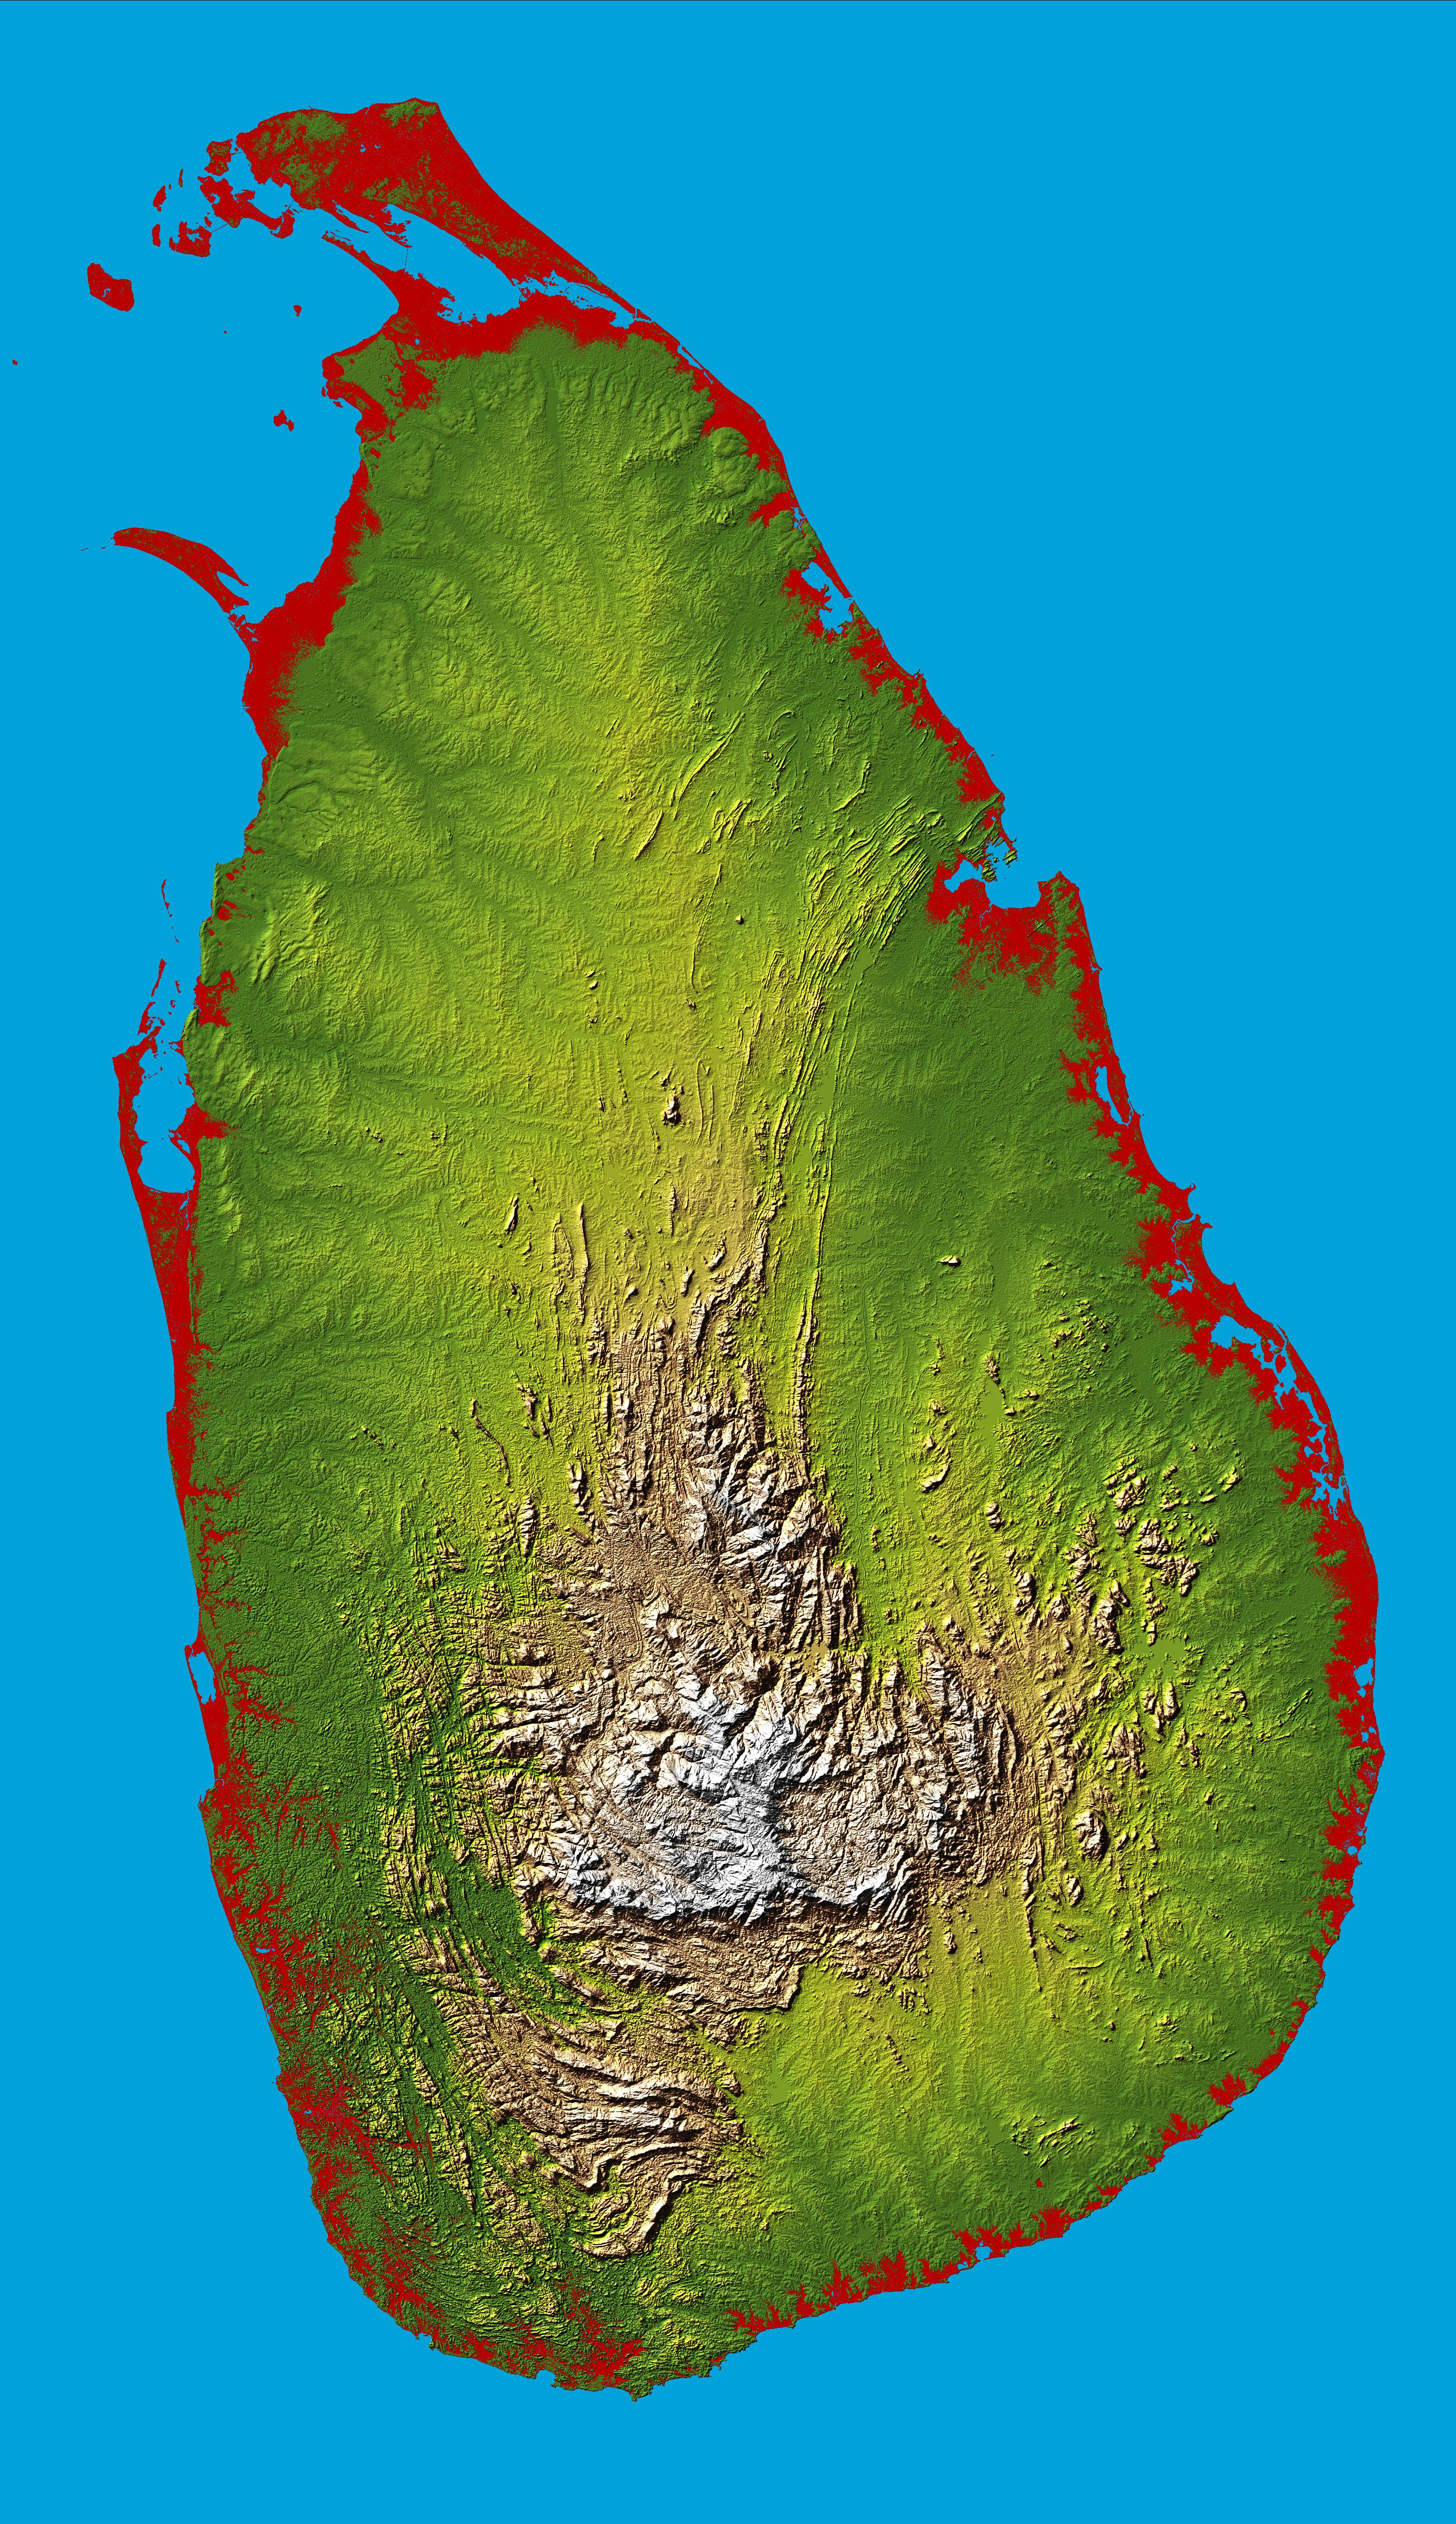 Topographic map of Sri Lanka